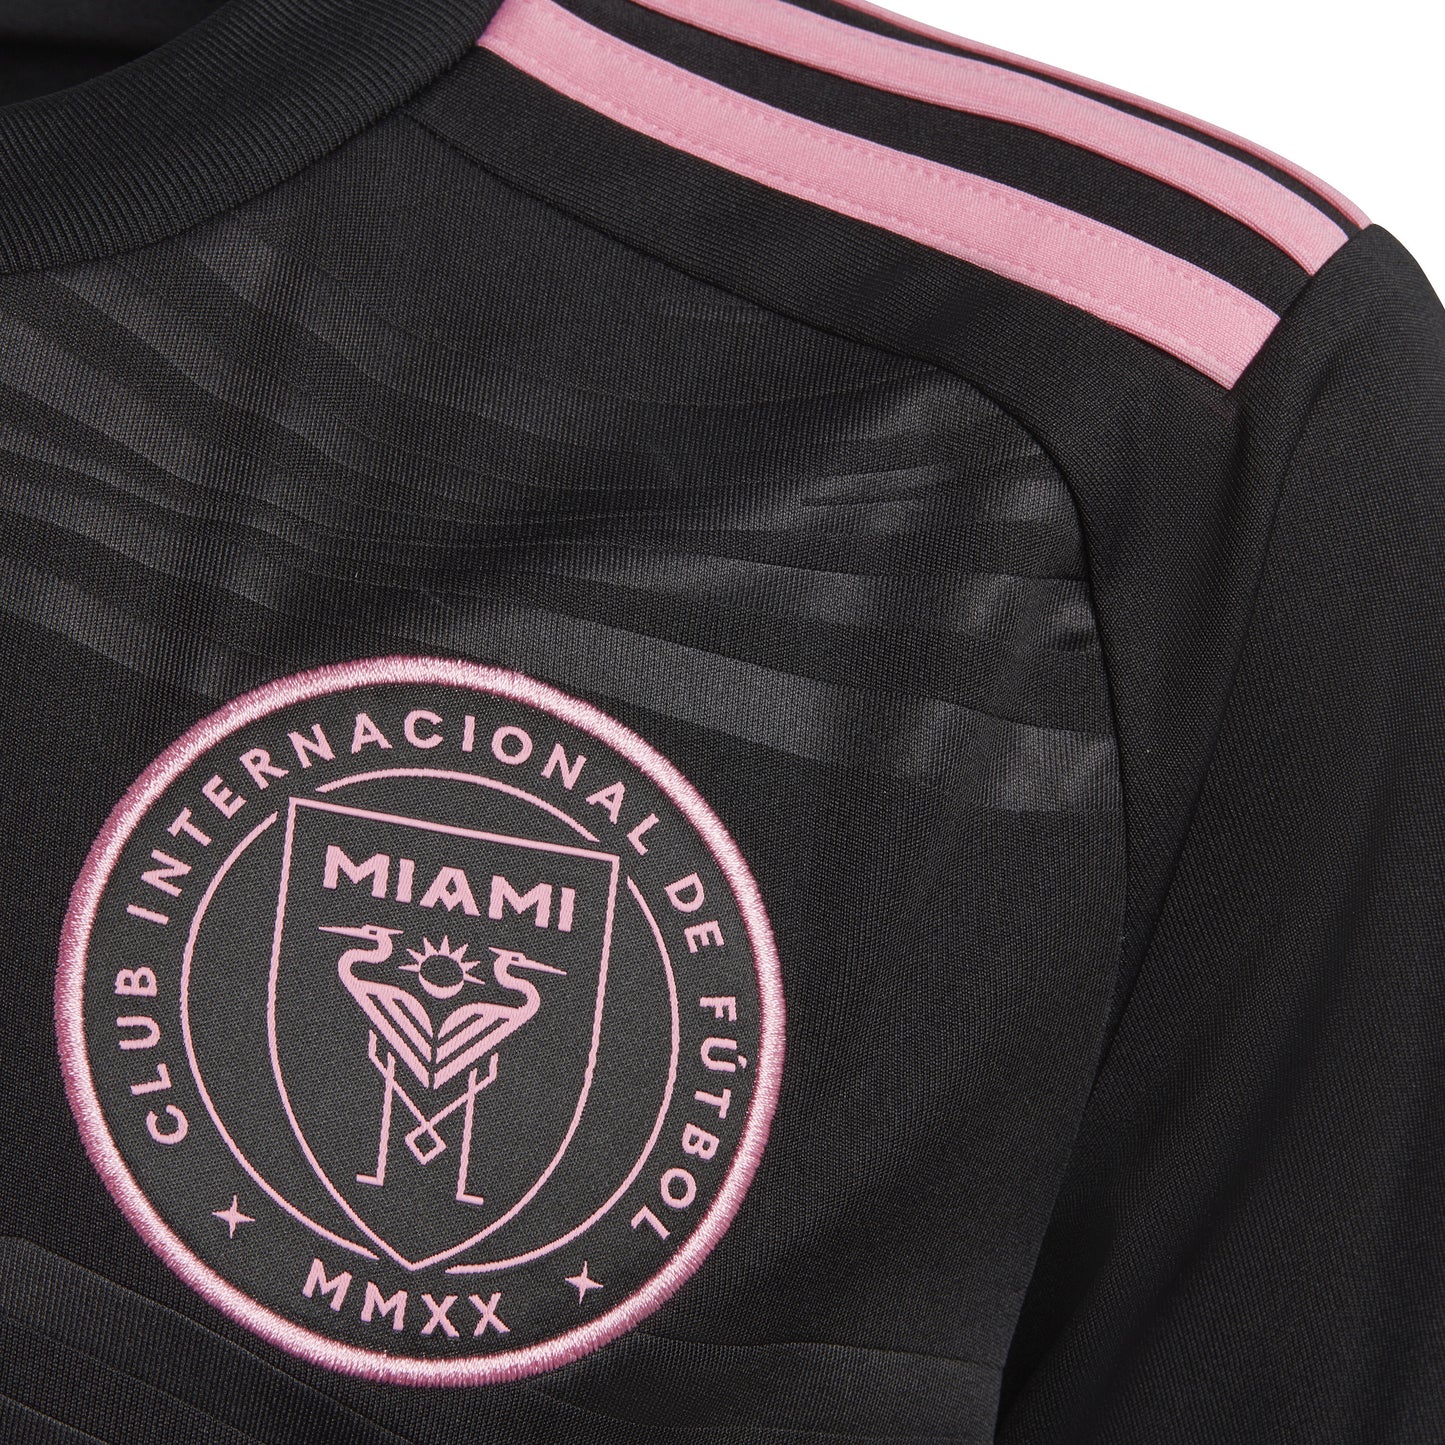 adidas Youth Inter Miami FC MLS 2023 Jersey away Black Messi #10